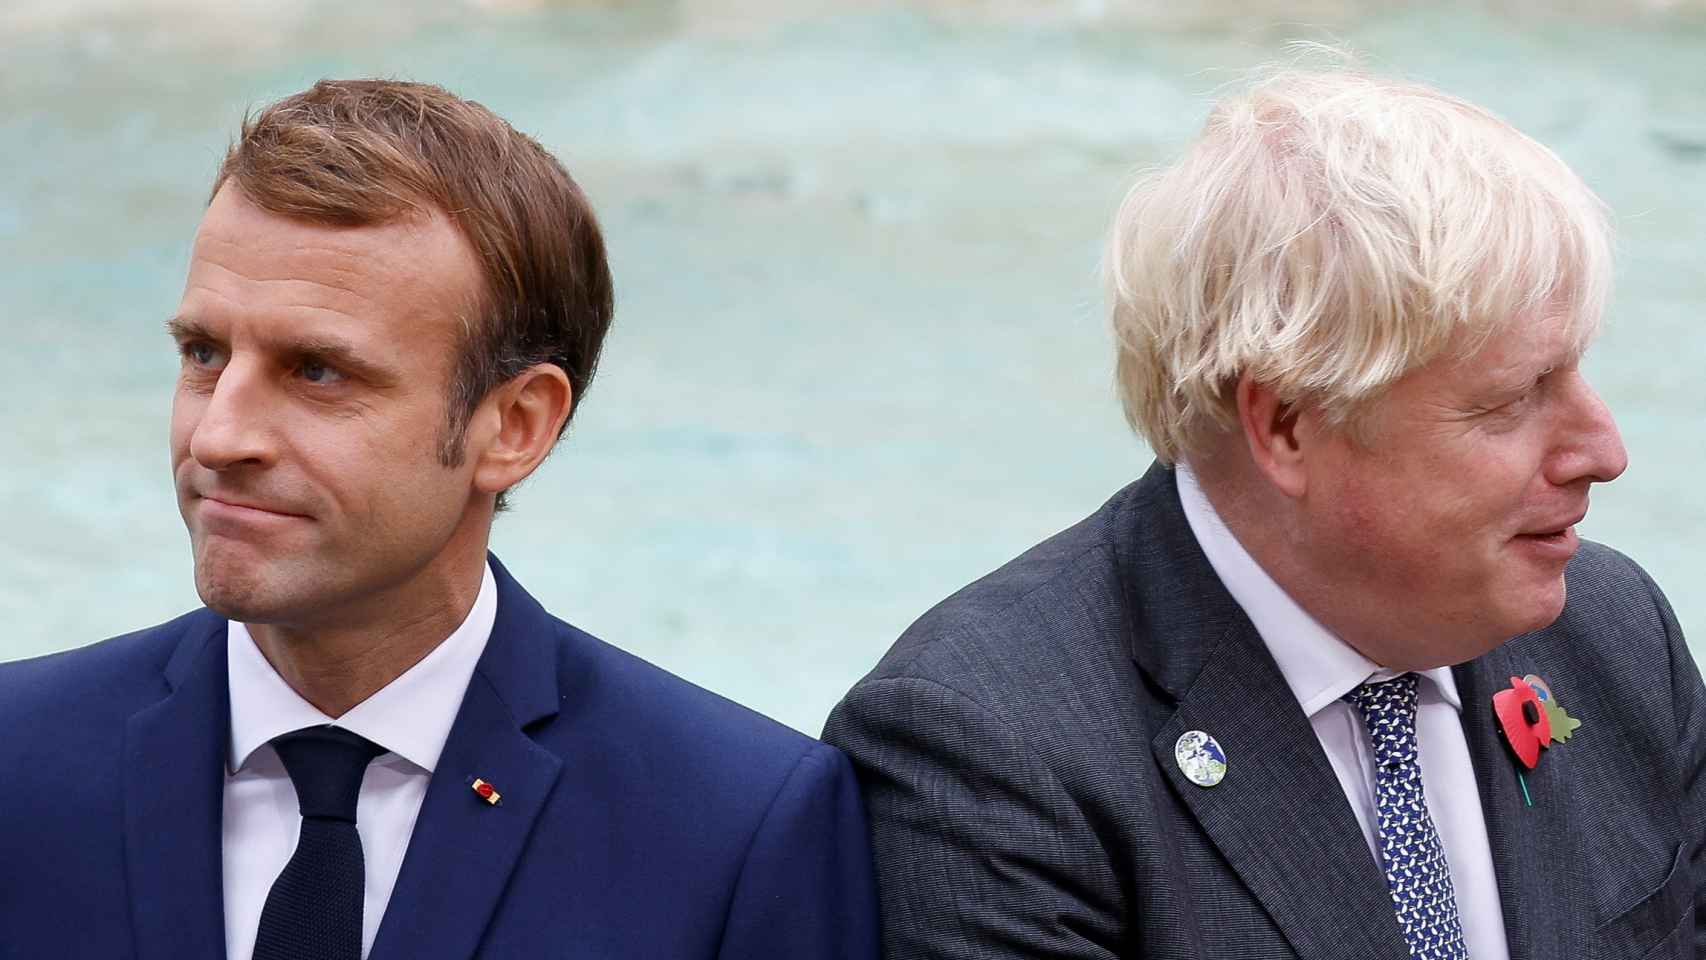 Emmanuel Macron y Boris Johnson en el G20 celebrado en Roma.